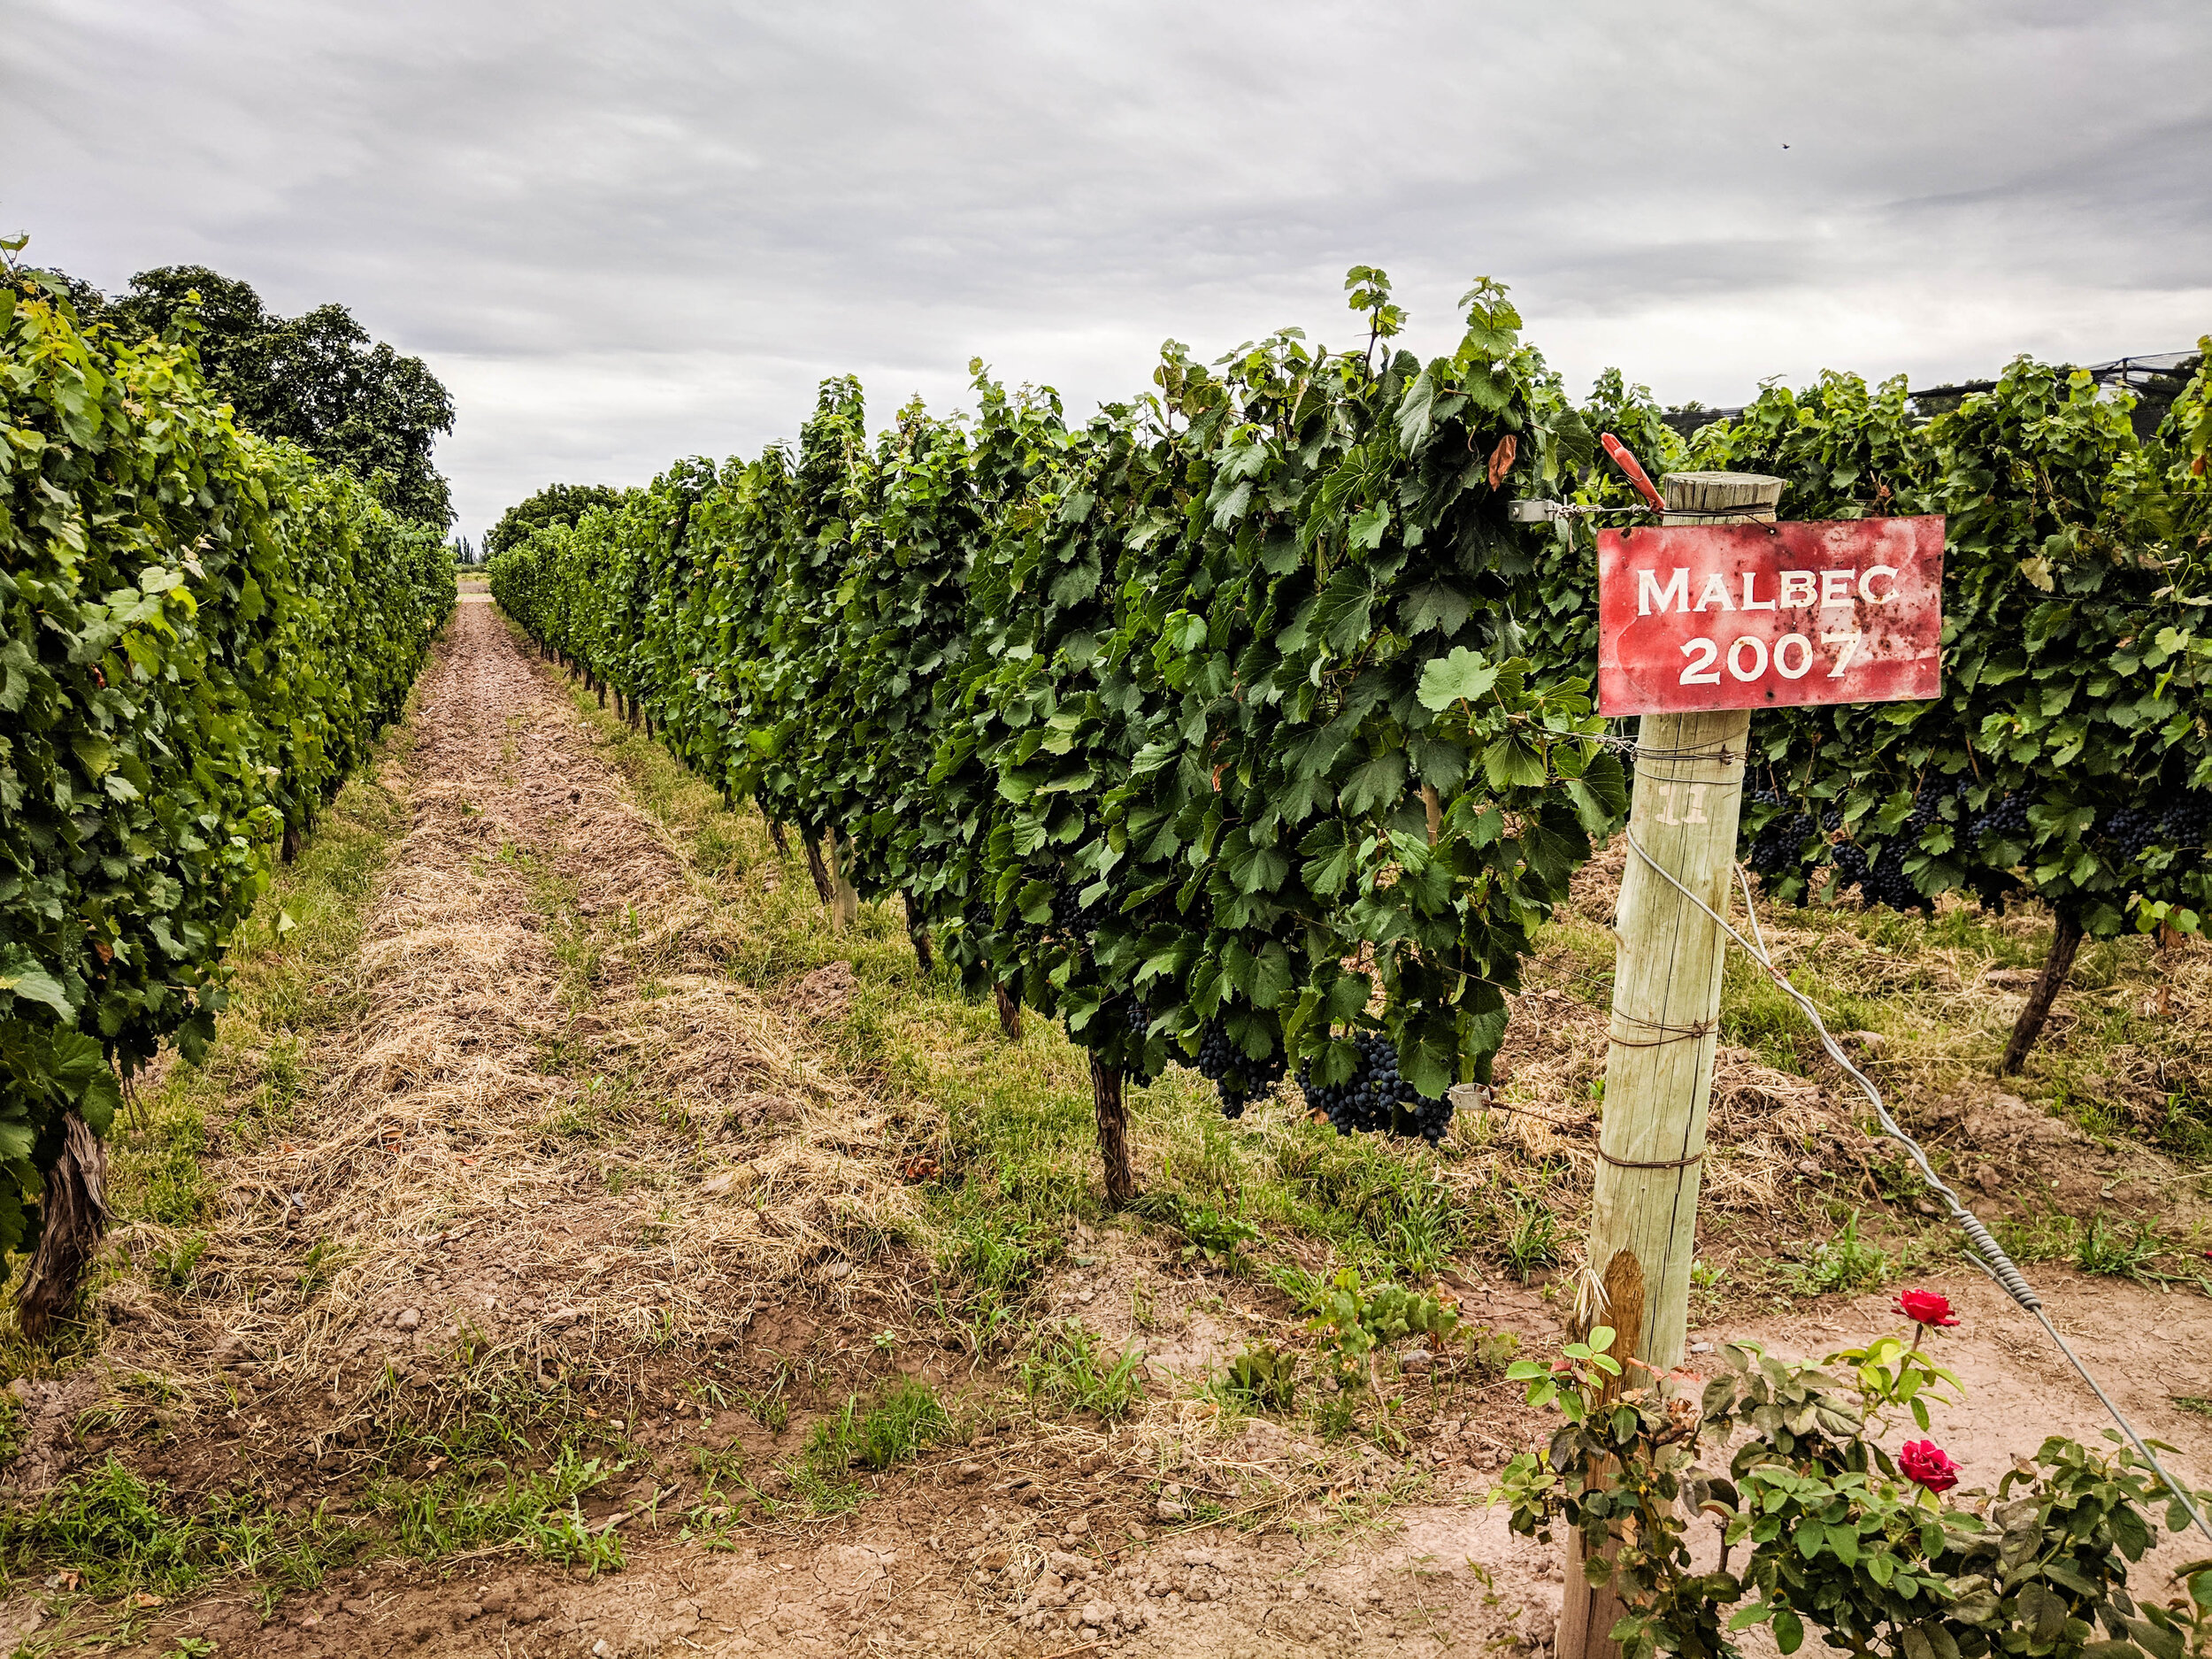 Vineyard in Mendoza